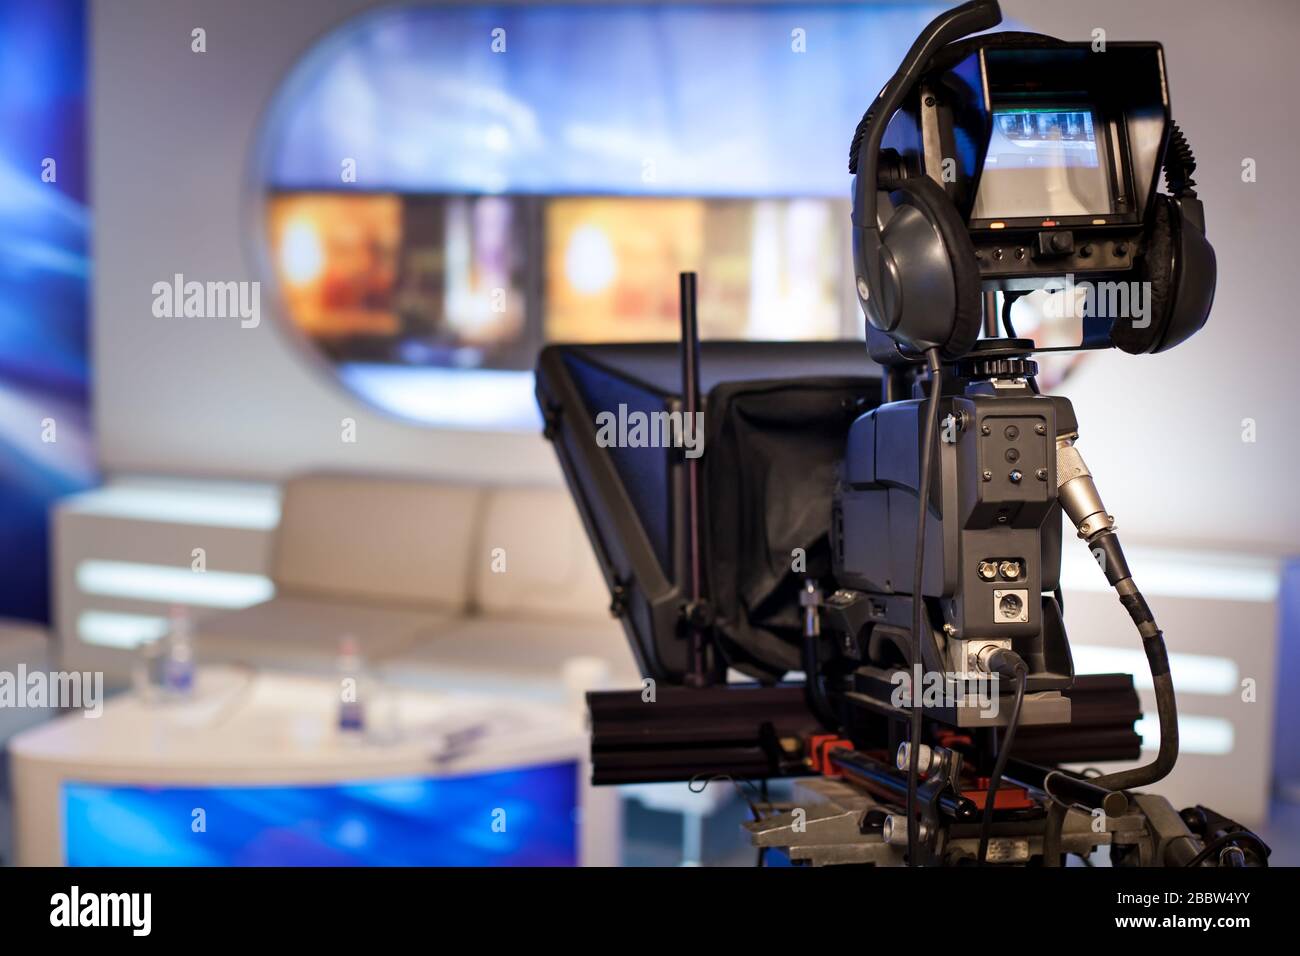 Video Kamera - Aufnahme Show im TV-Studio - Fokus auf Kamera Stockfoto